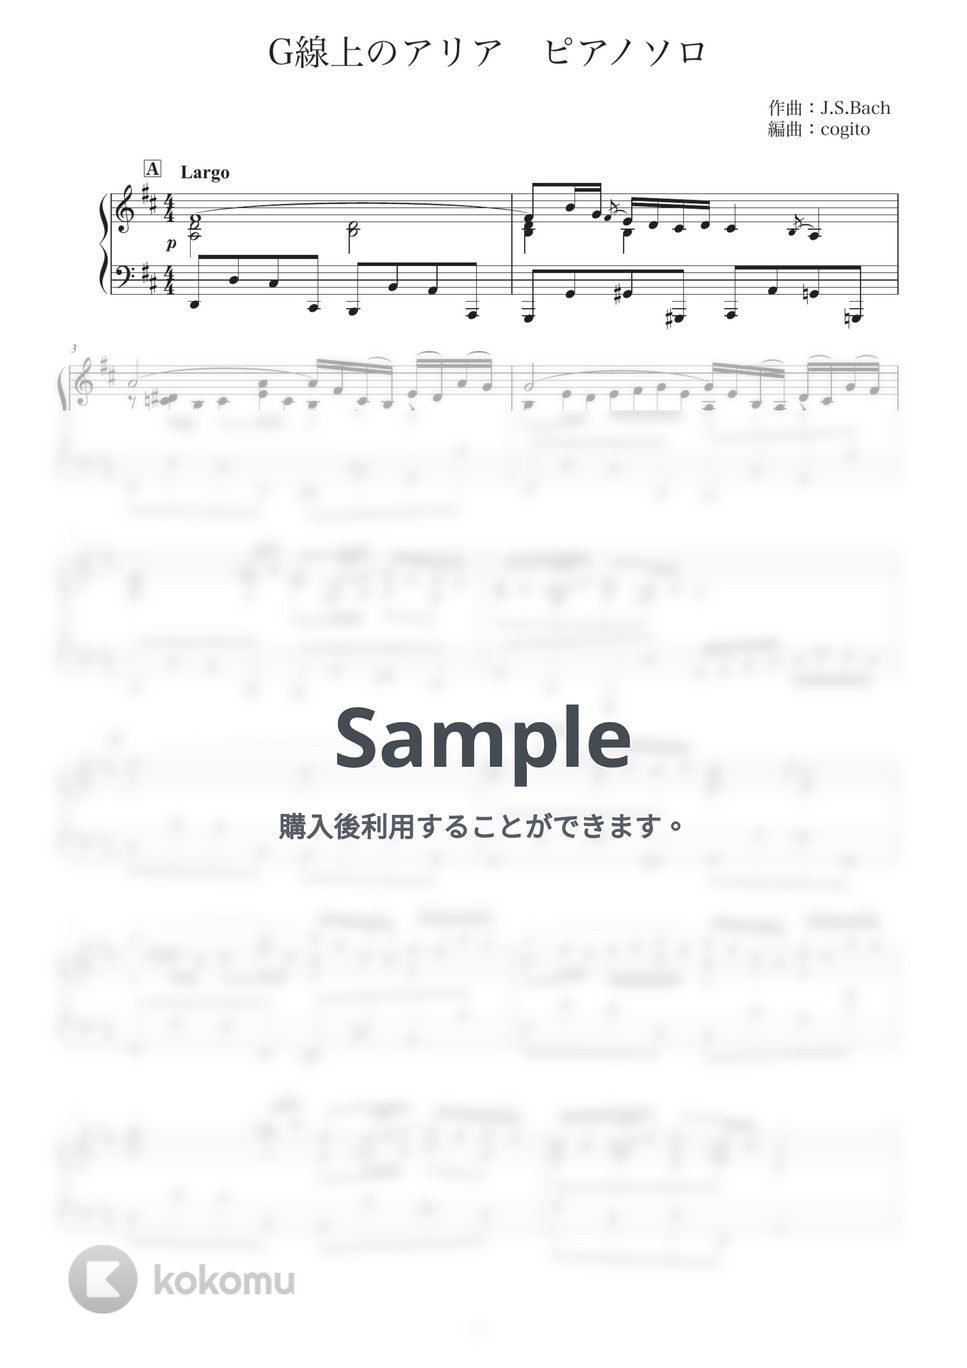 J.S.Bach - 【卒業式・式典用】G線上のアリア ピアノアレンジ (ピアノ/卒業式/式典/BGM) by cogito